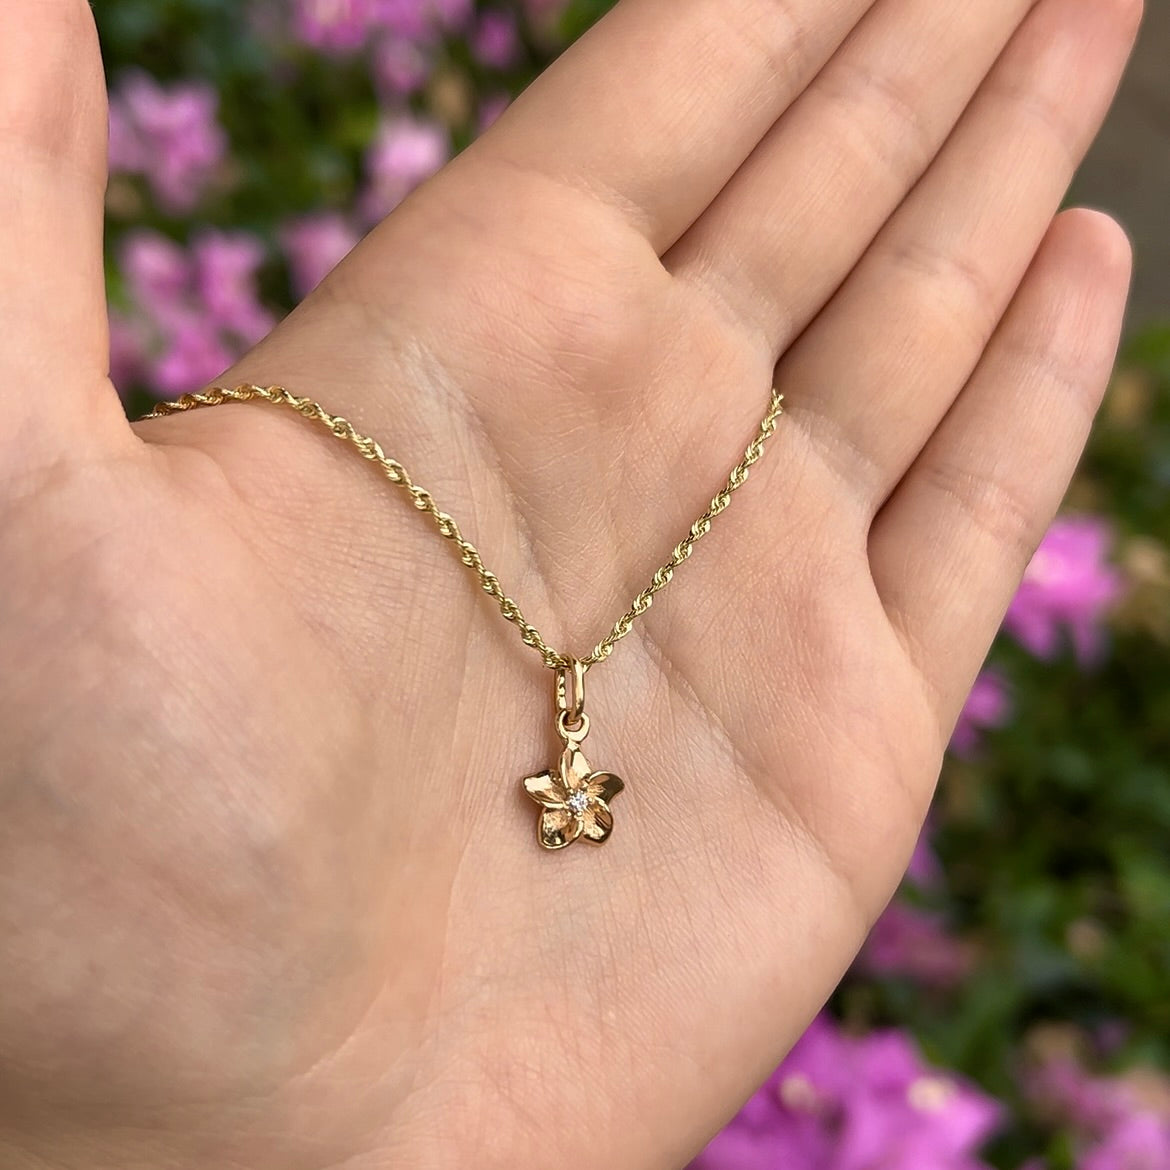 Plumeria Jewelry, Gold Flower Necklace, Sterling Silver W/ 14K Gold Plumeria,  Ekolu Pua Melia, Made in Hawaii, Hawaiian Jewelry, Plumeria - Etsy